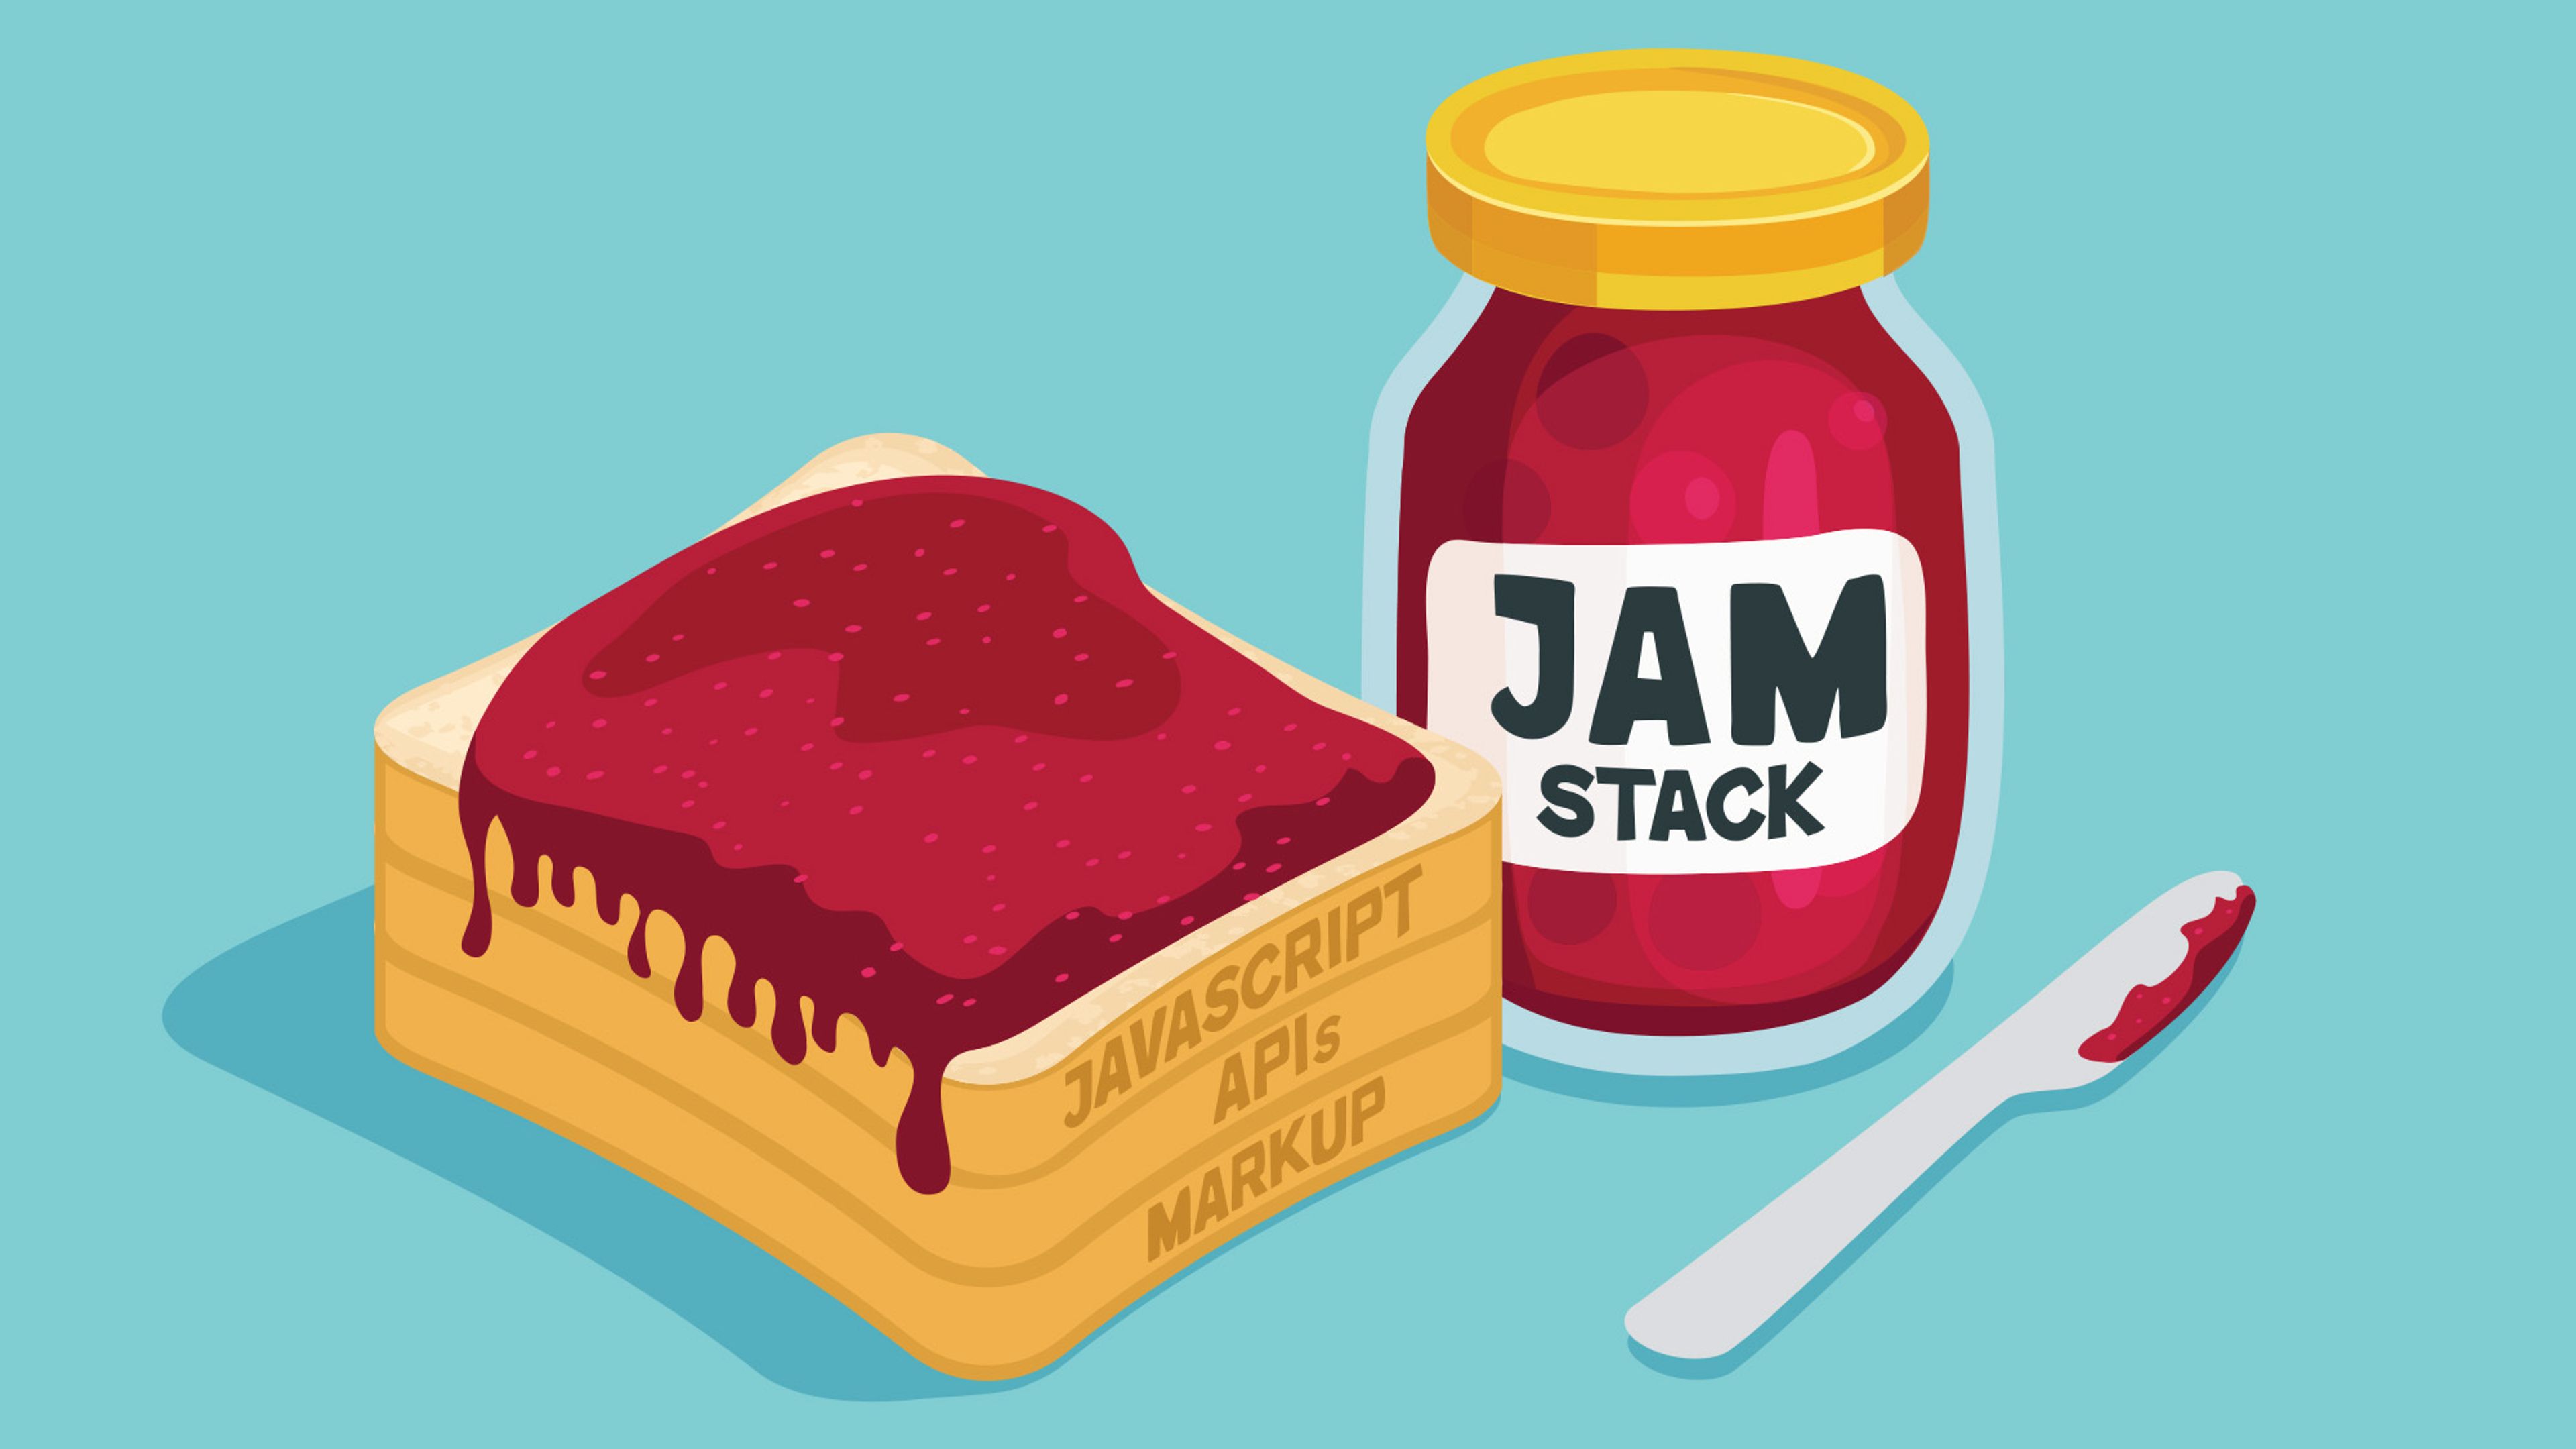 Jar of Jam and a toast